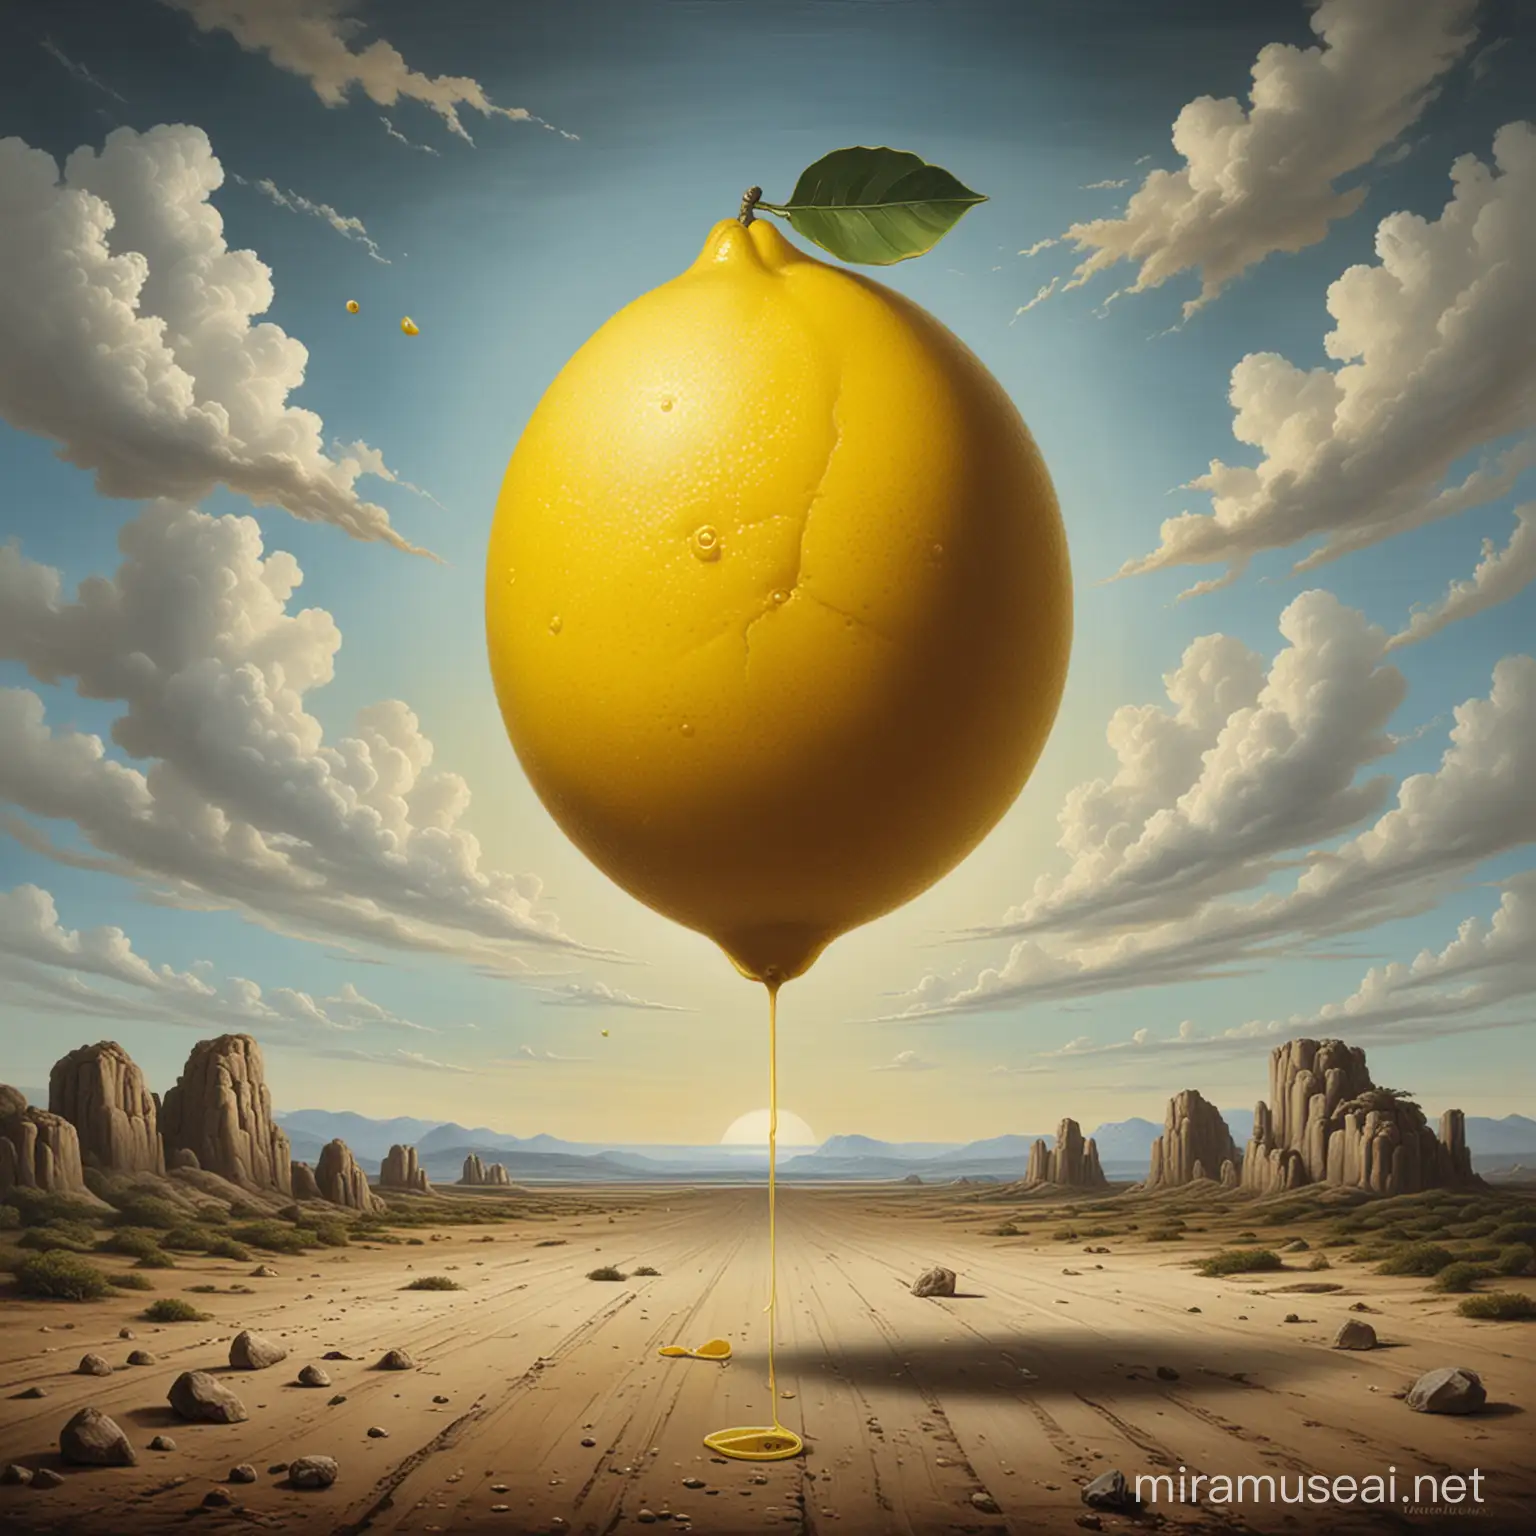 Surreal Lemon Art Vibrant Citrus Imagery in Surrealist Painting